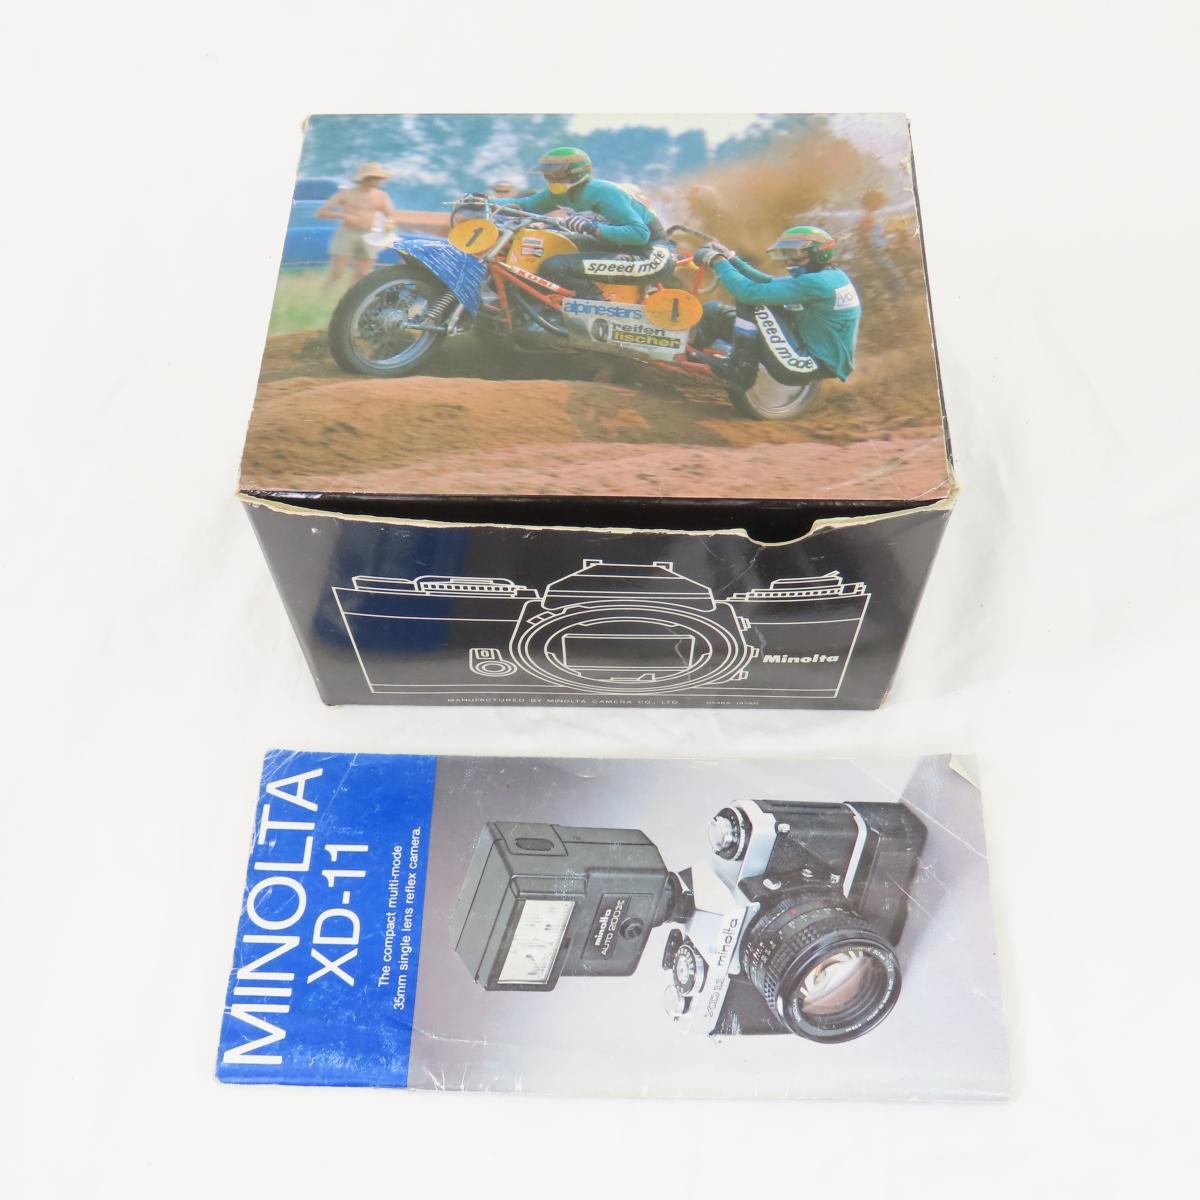 Minolta XD-11 35mm Film Camera with Original Box